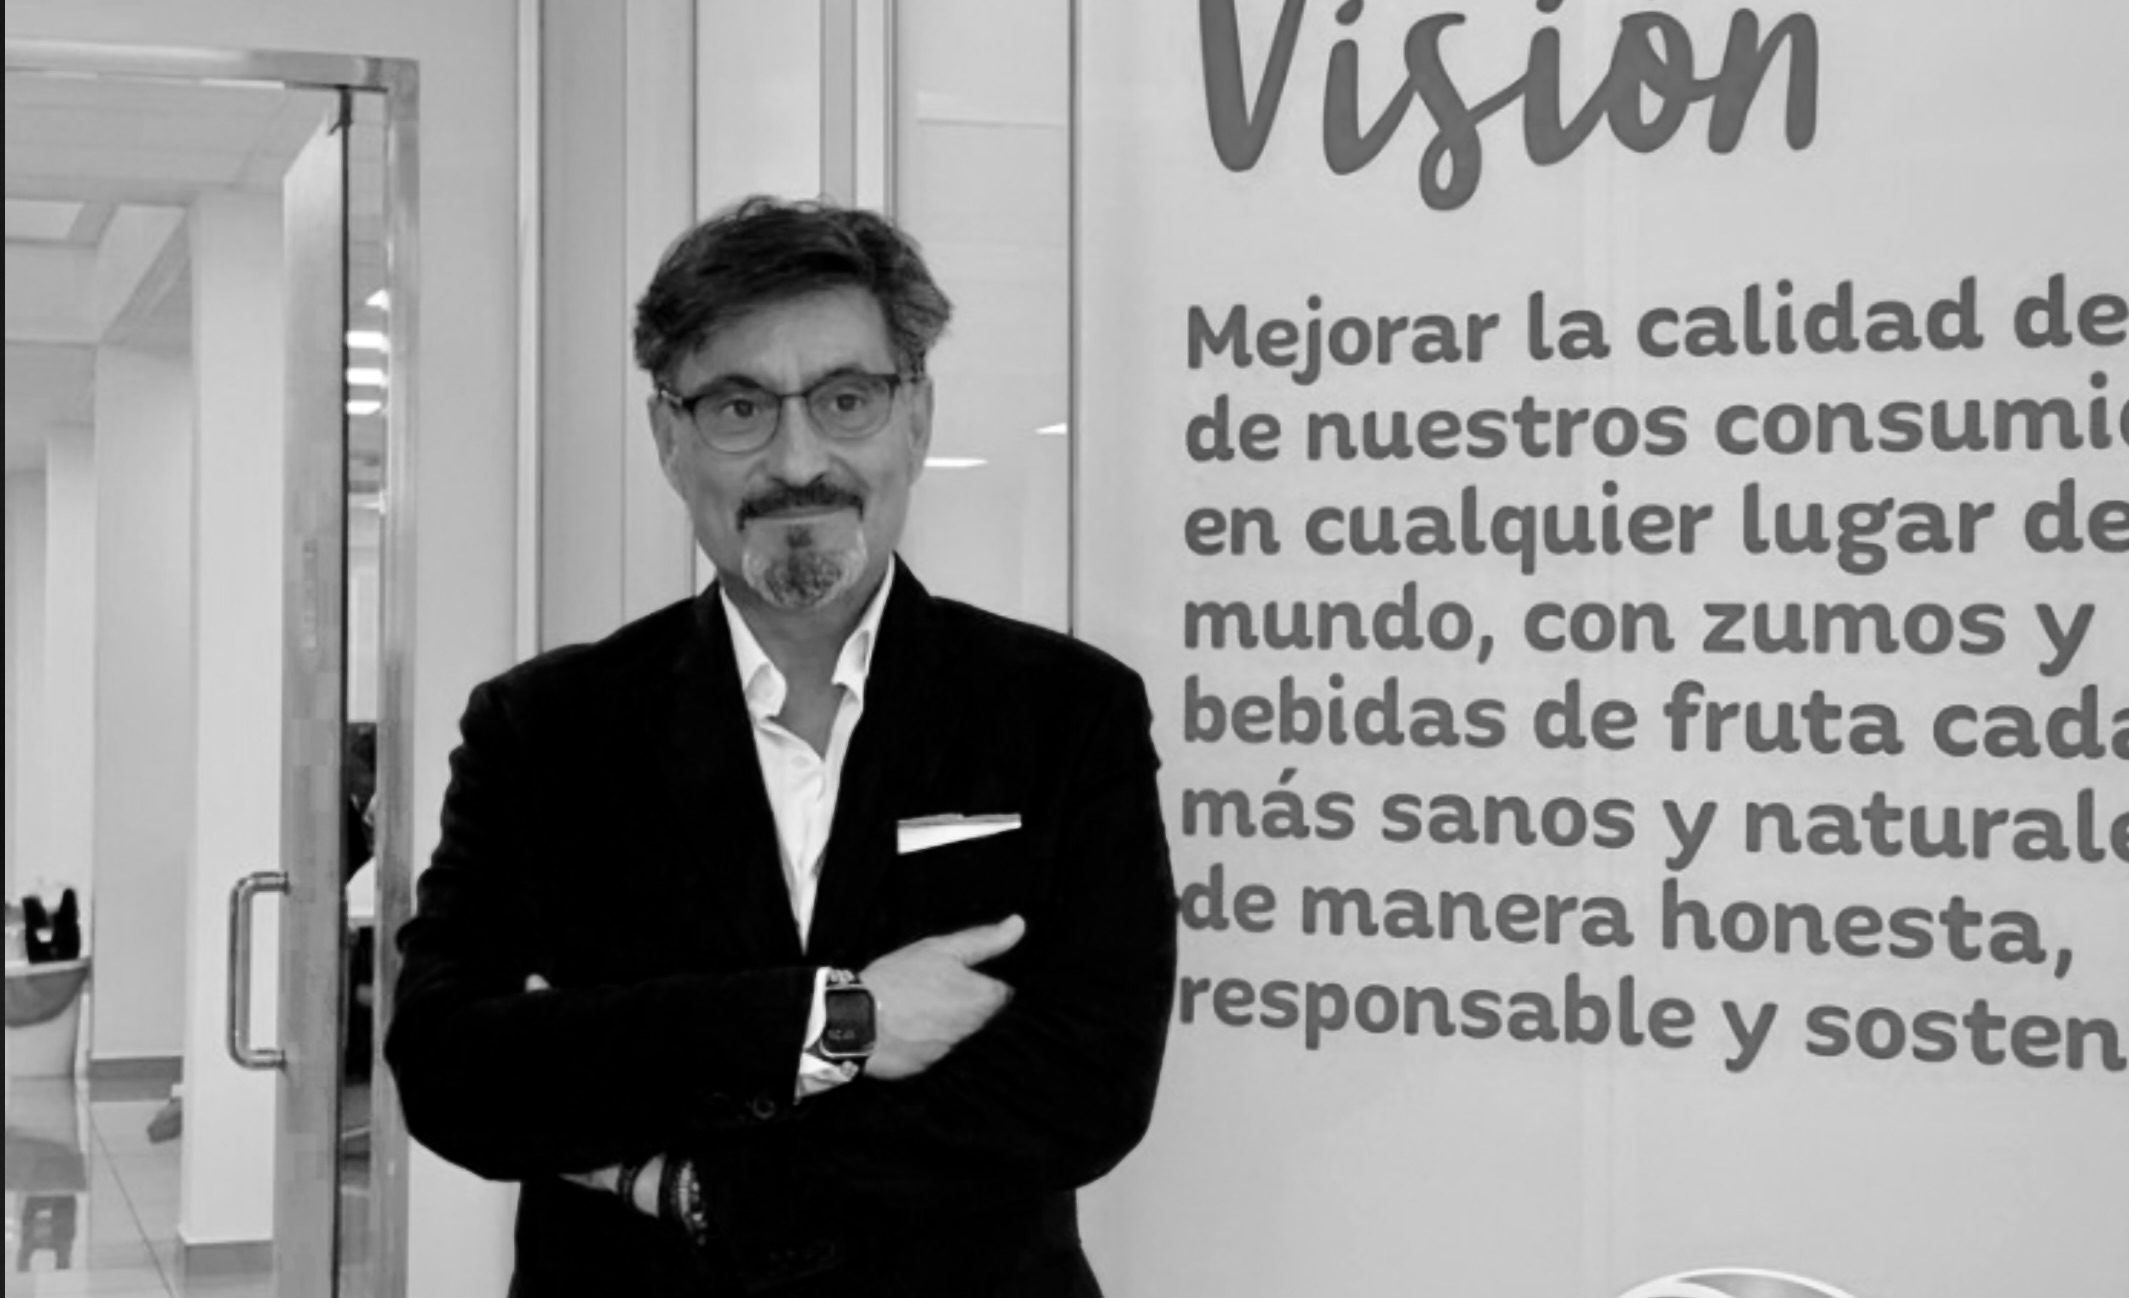 Joaquín Jiménez director de marketing de Juver, empresa líder en zumos en horeca